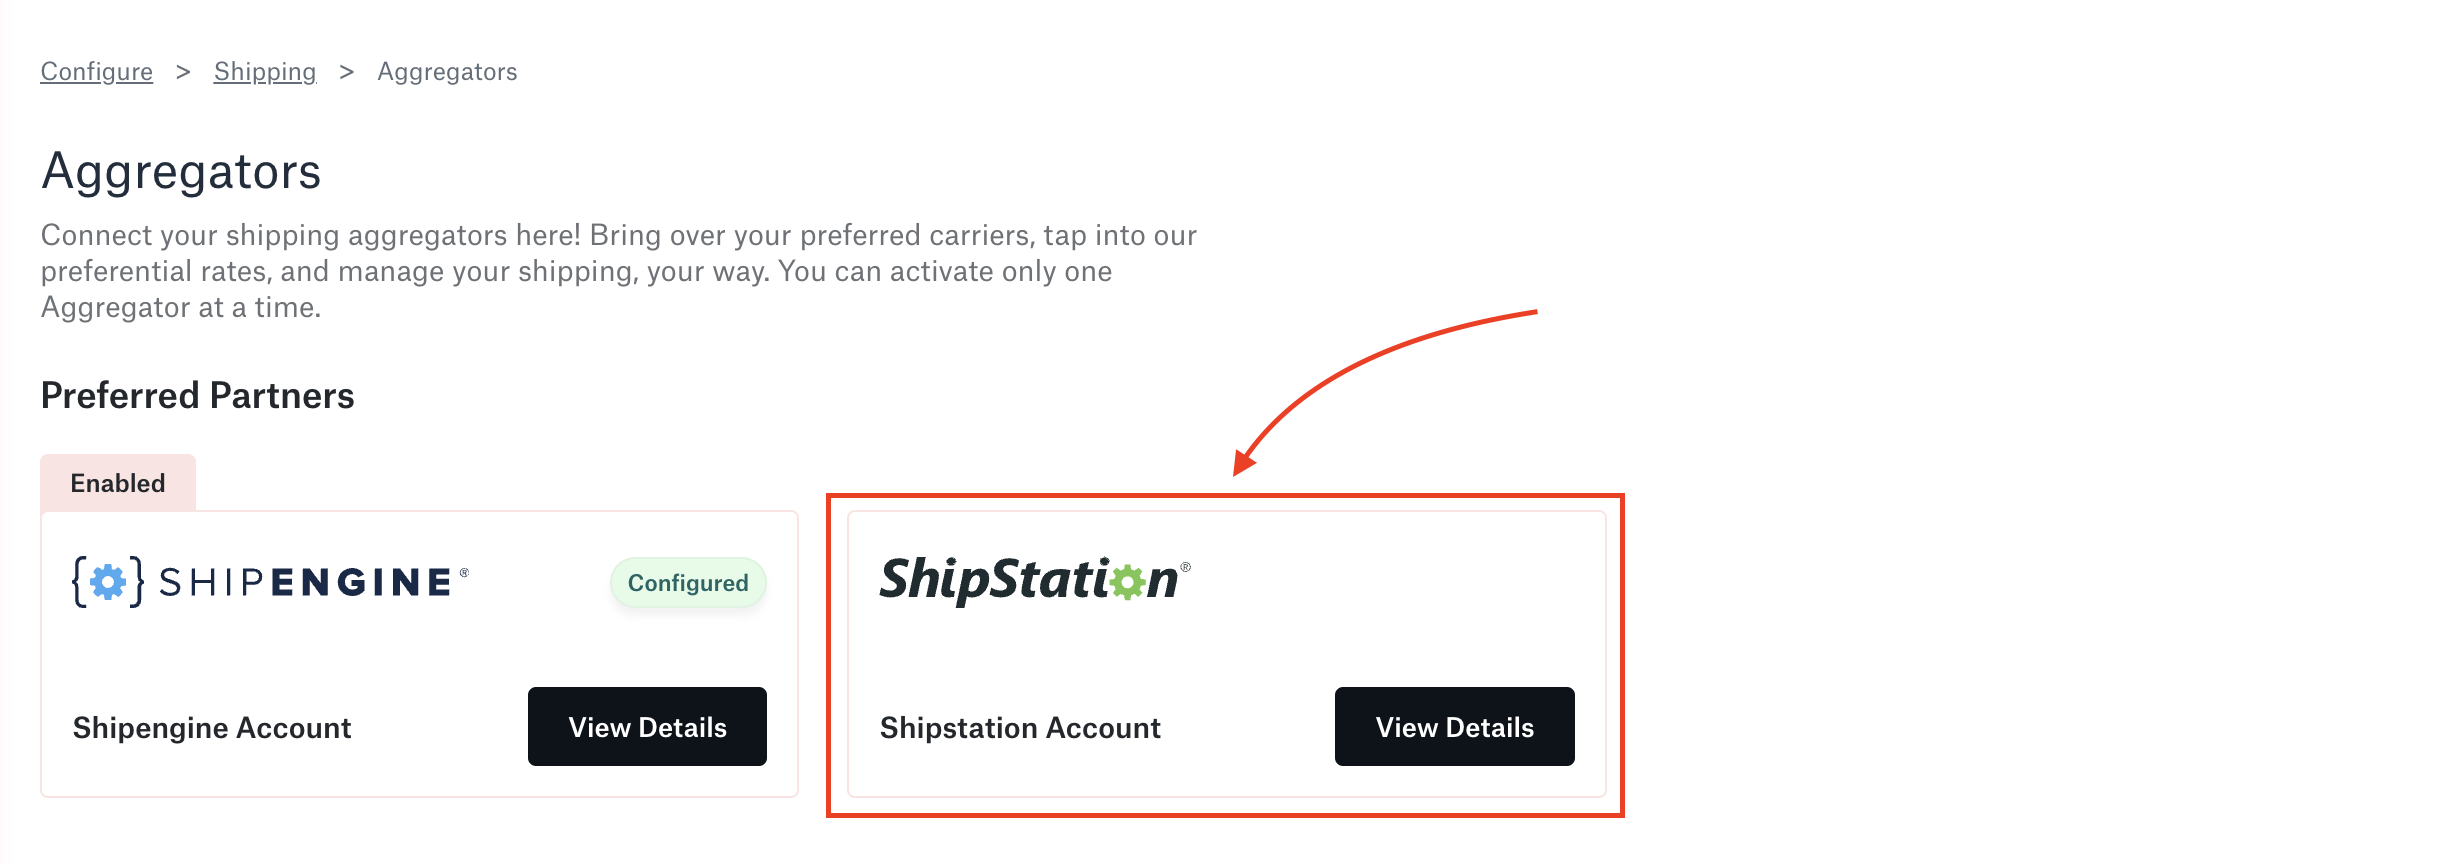 RR_shipping_aggregators_Shipstation_MRK.png